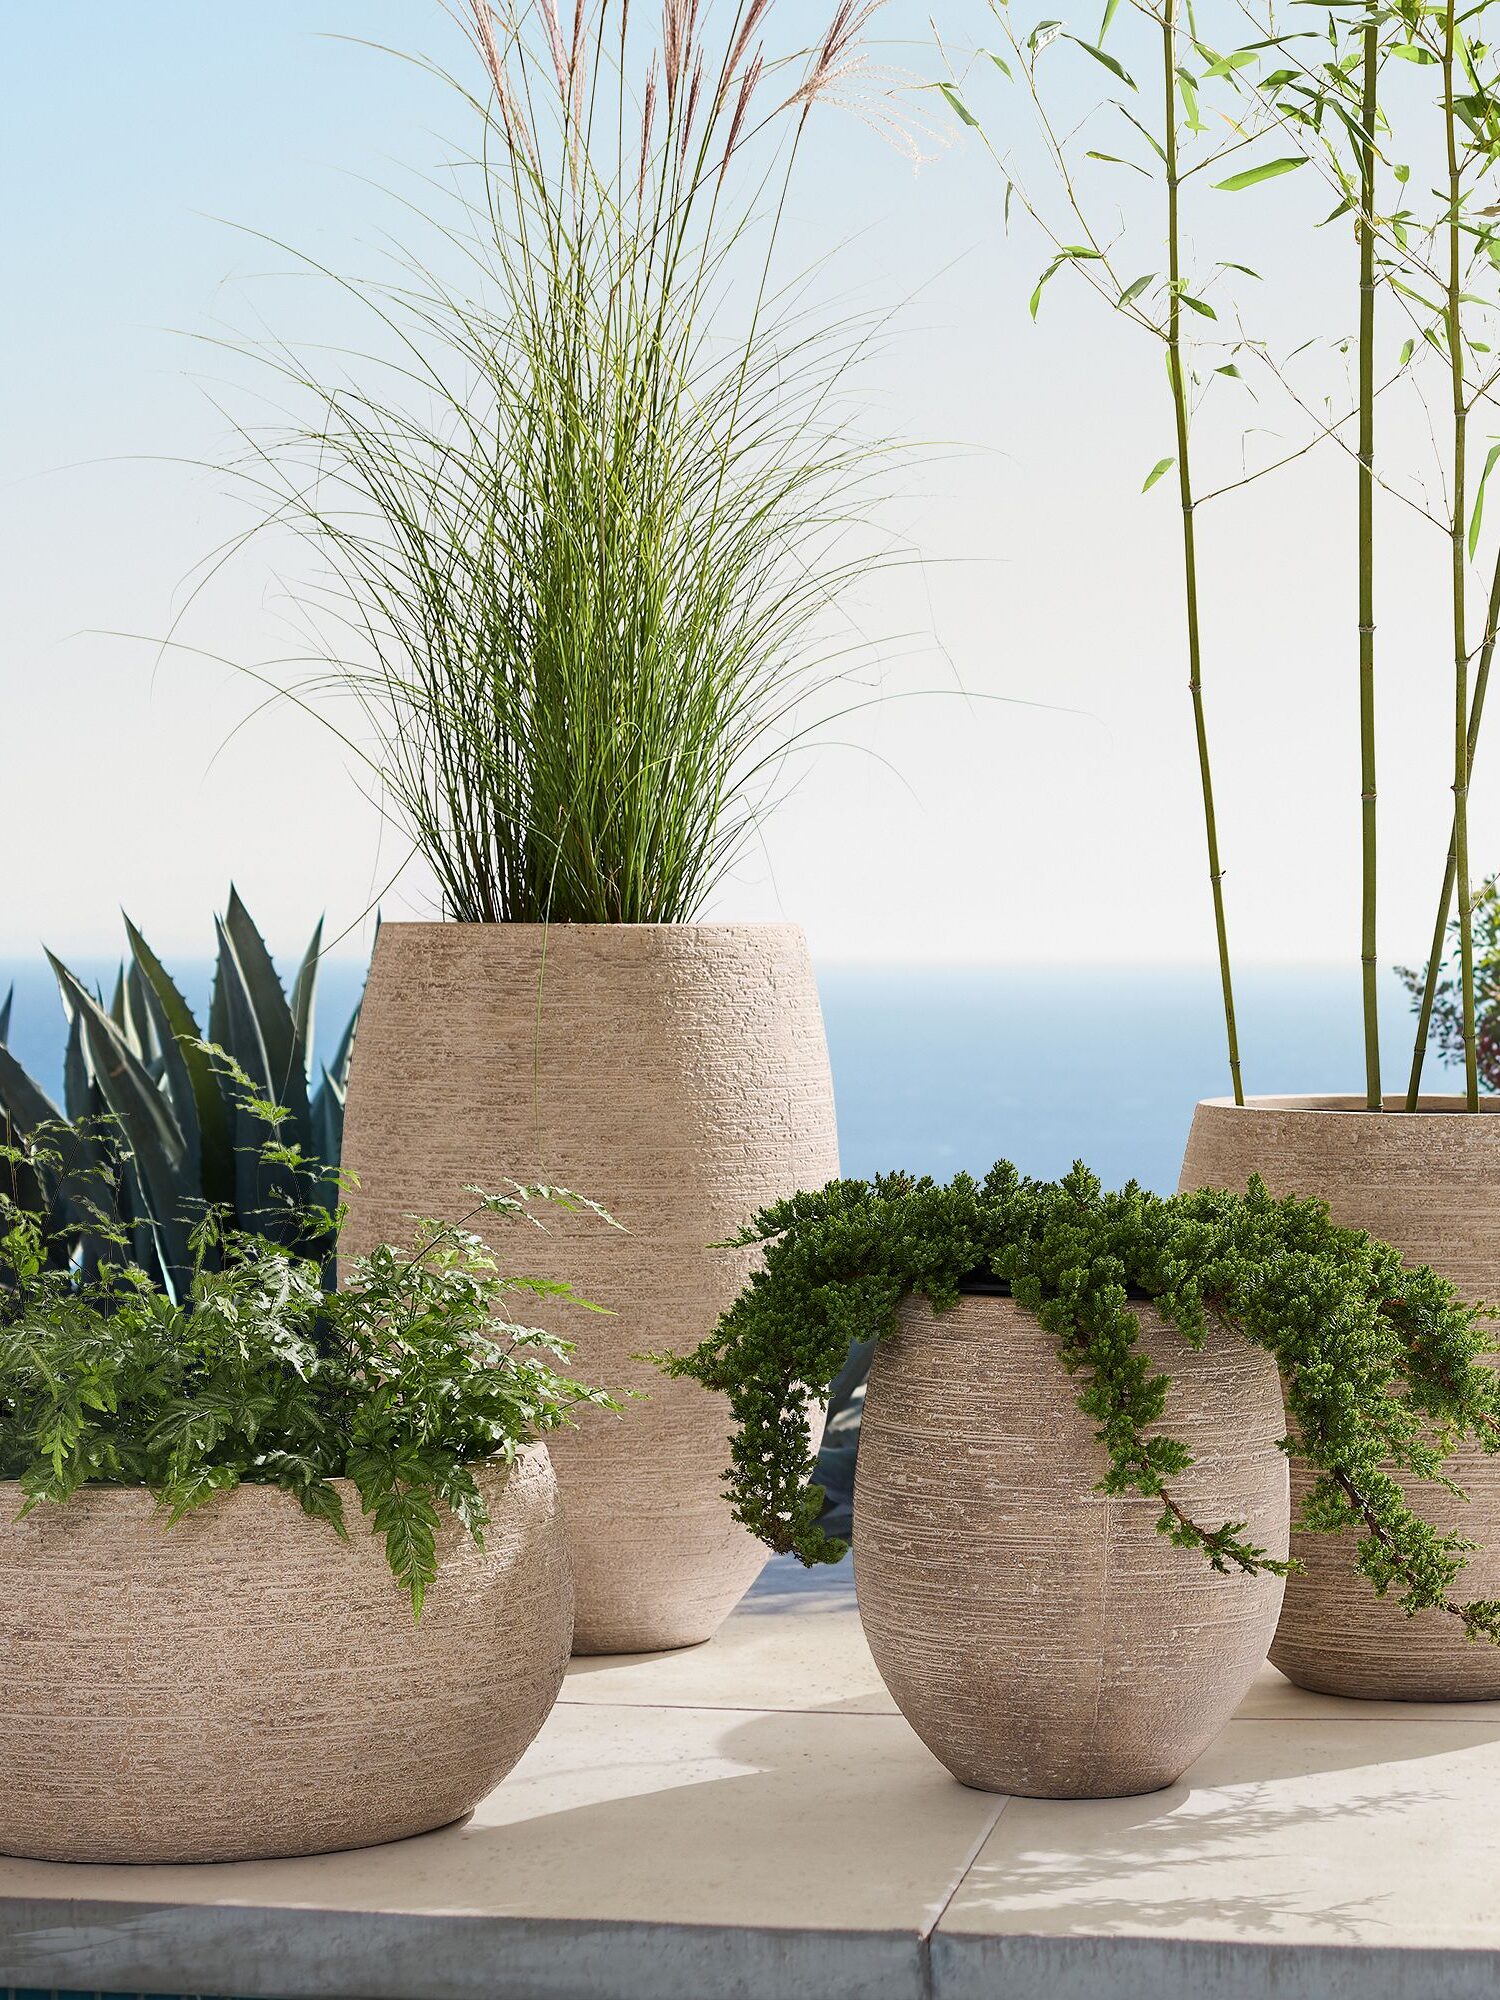 4 light beige West Elm plant pots with plants in it set on a balcony.